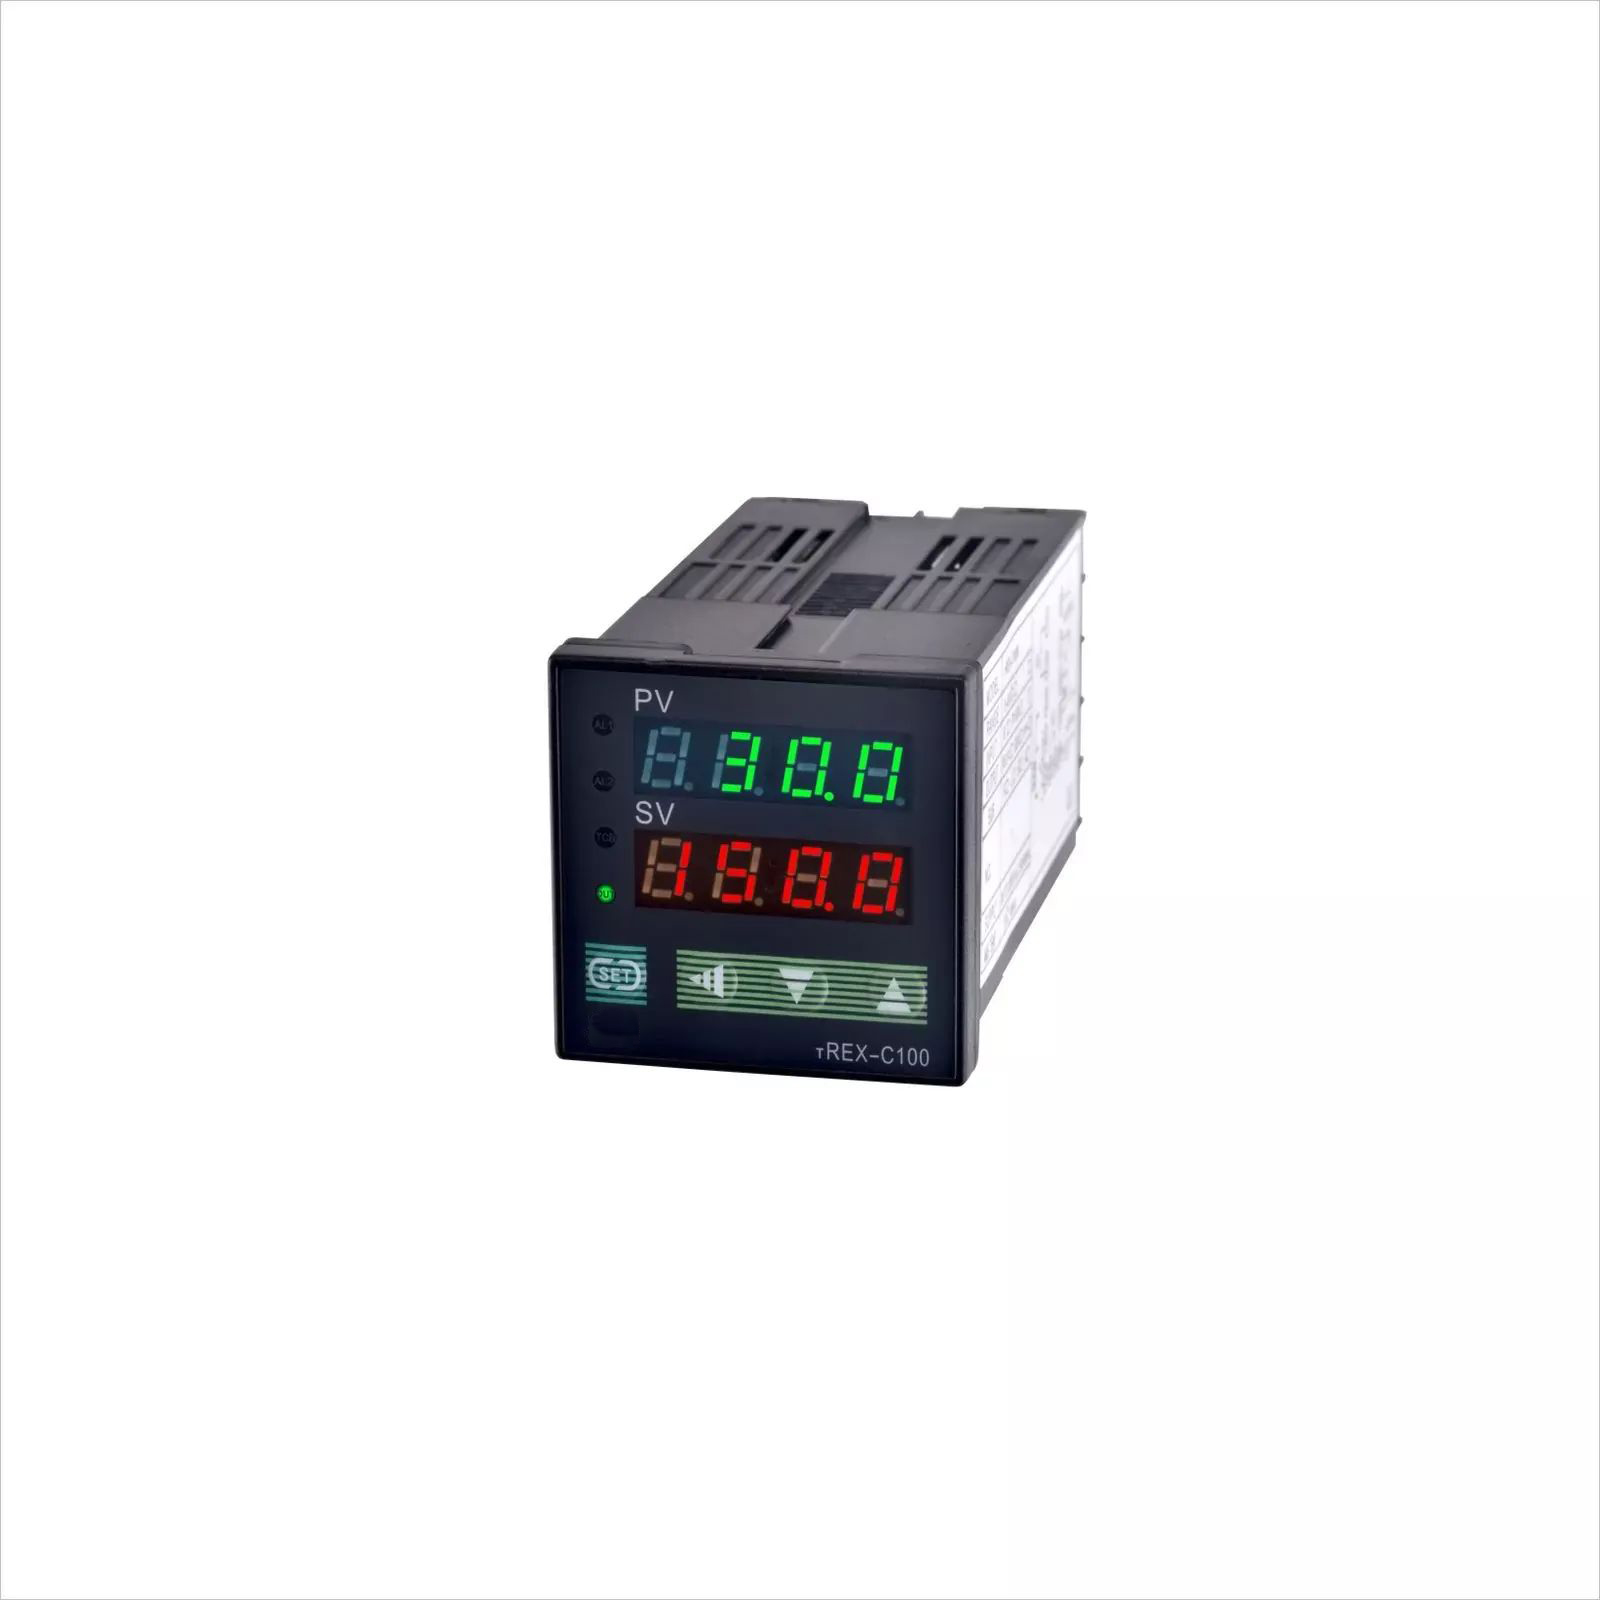 REX-C100 Industrial multifunctional Digital Modular PID temperature controller